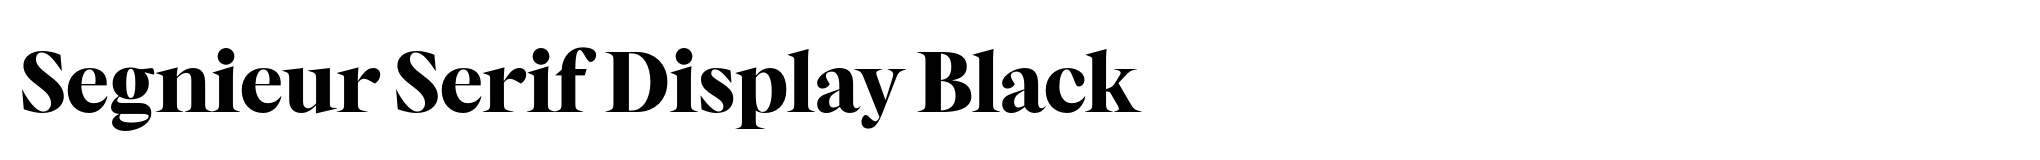 Segnieur Serif Display Black image